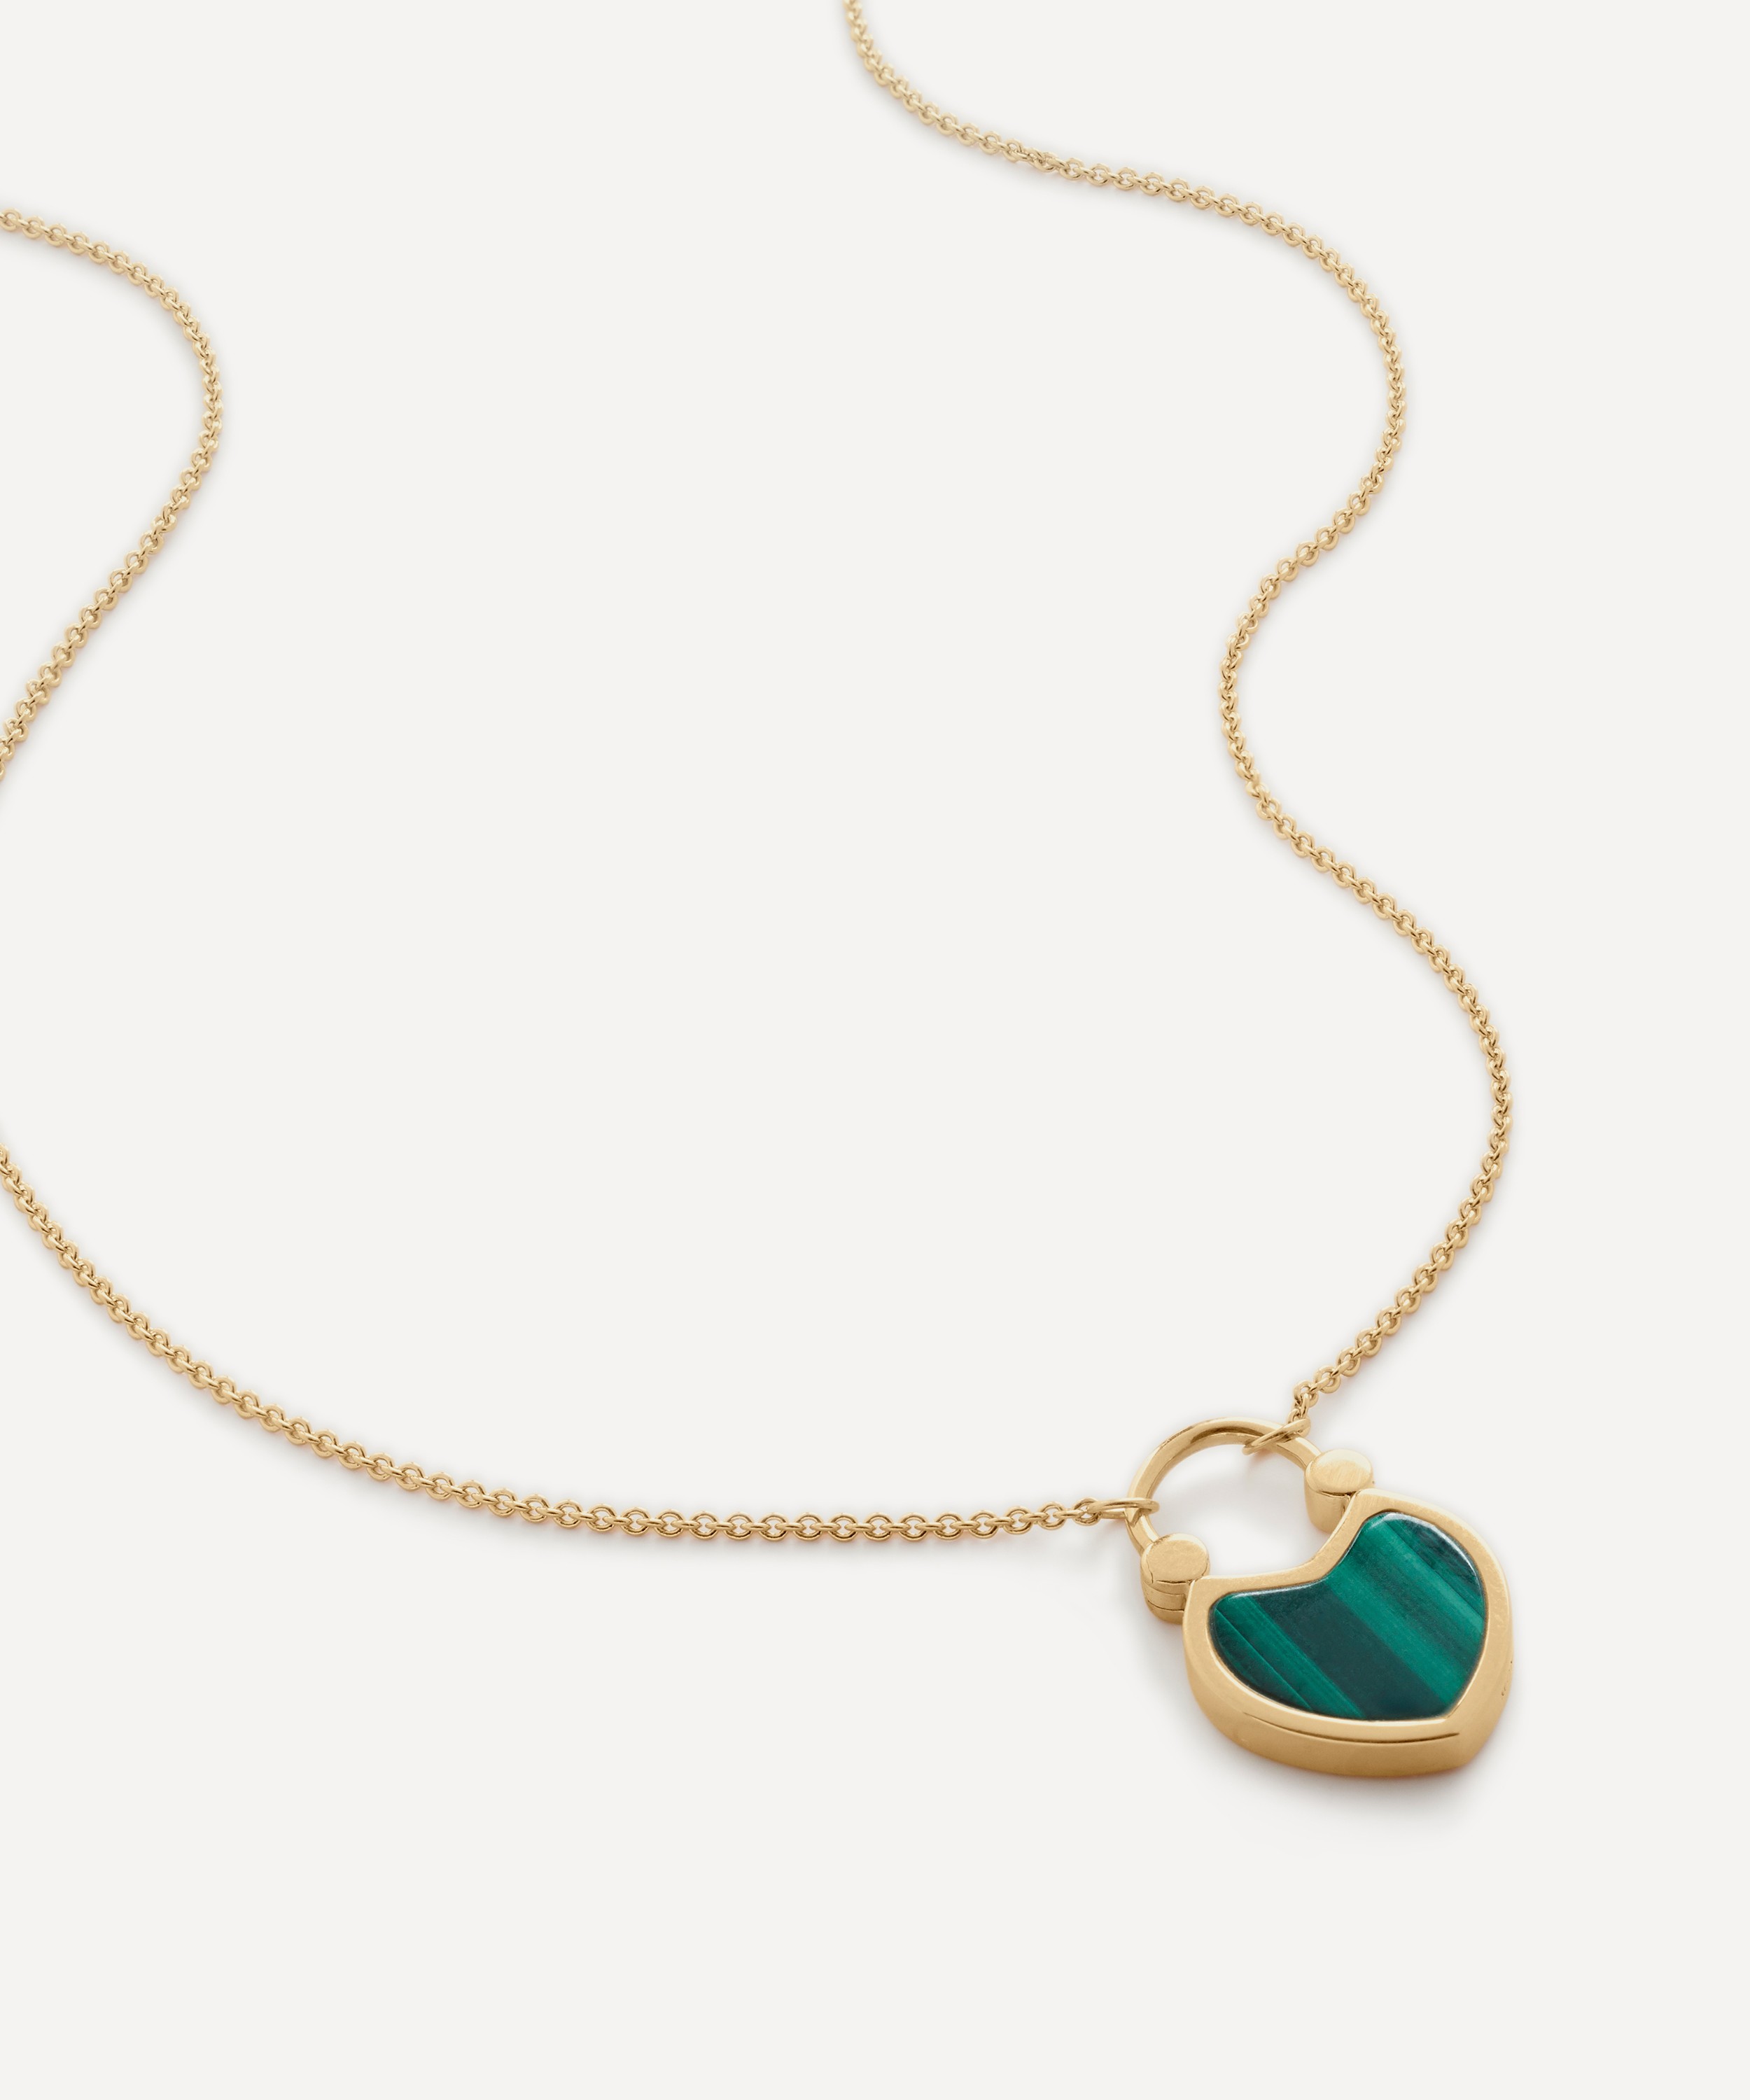 Monica Vinader Heart Padlock Pendant Necklace 18ct Gold Vermeil on Sterling